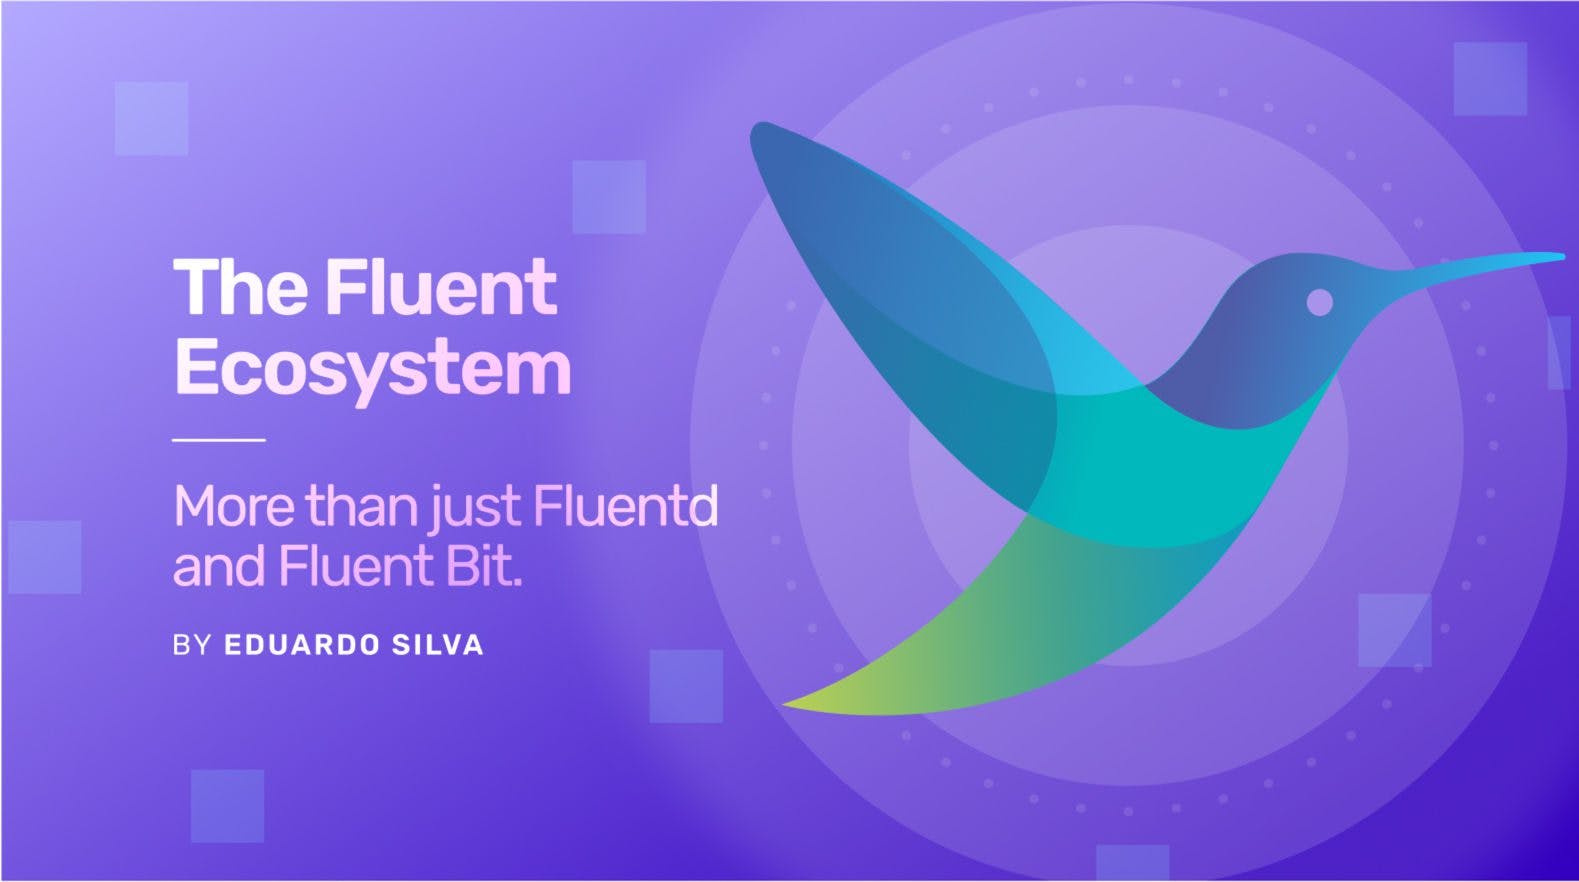 The Fluent Ecosystem - More than just Fluentd and Fluent Bit